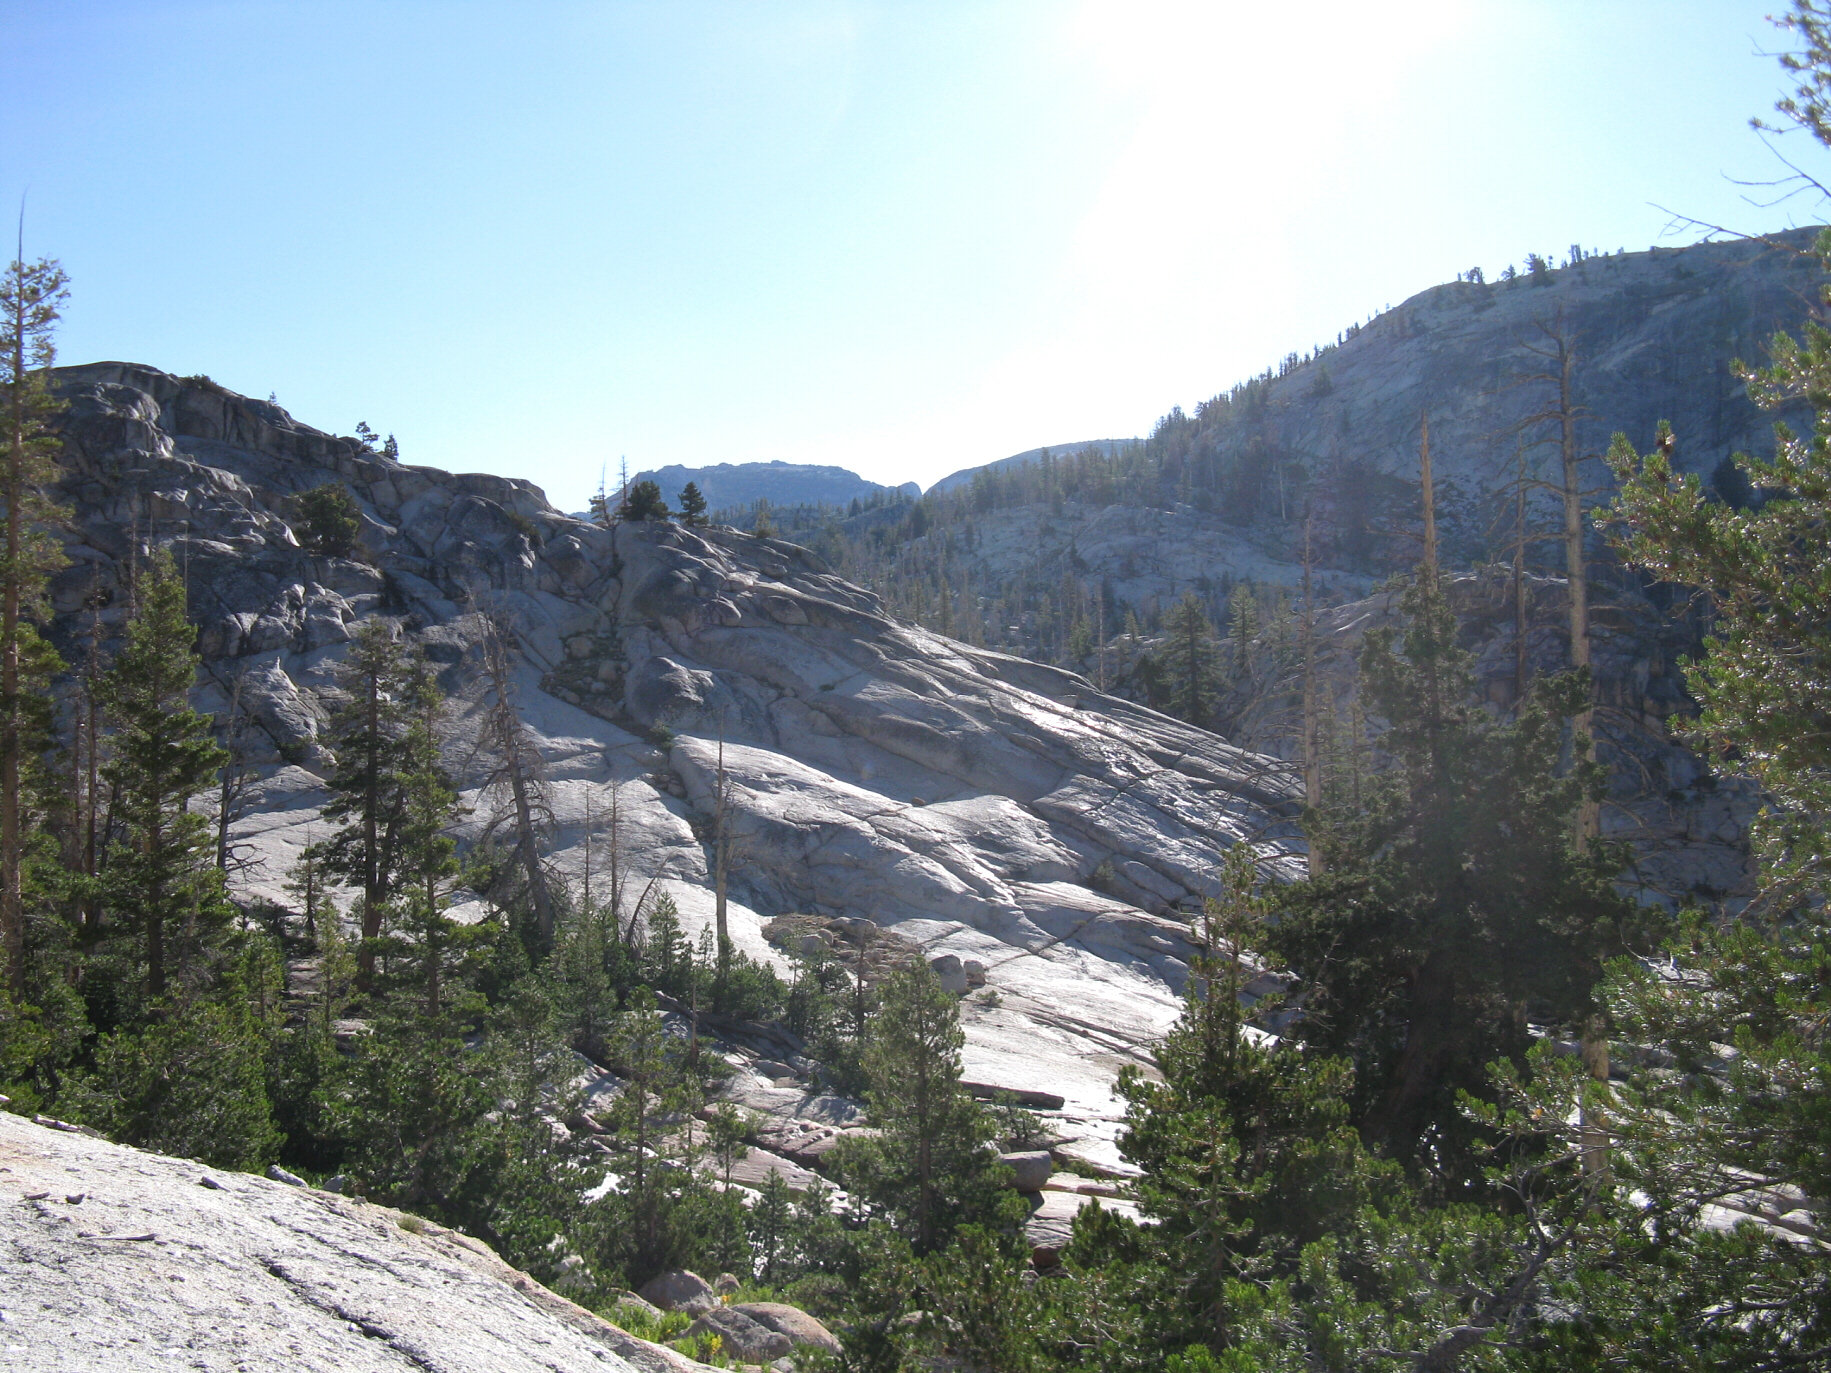 Yosemite 2010 042